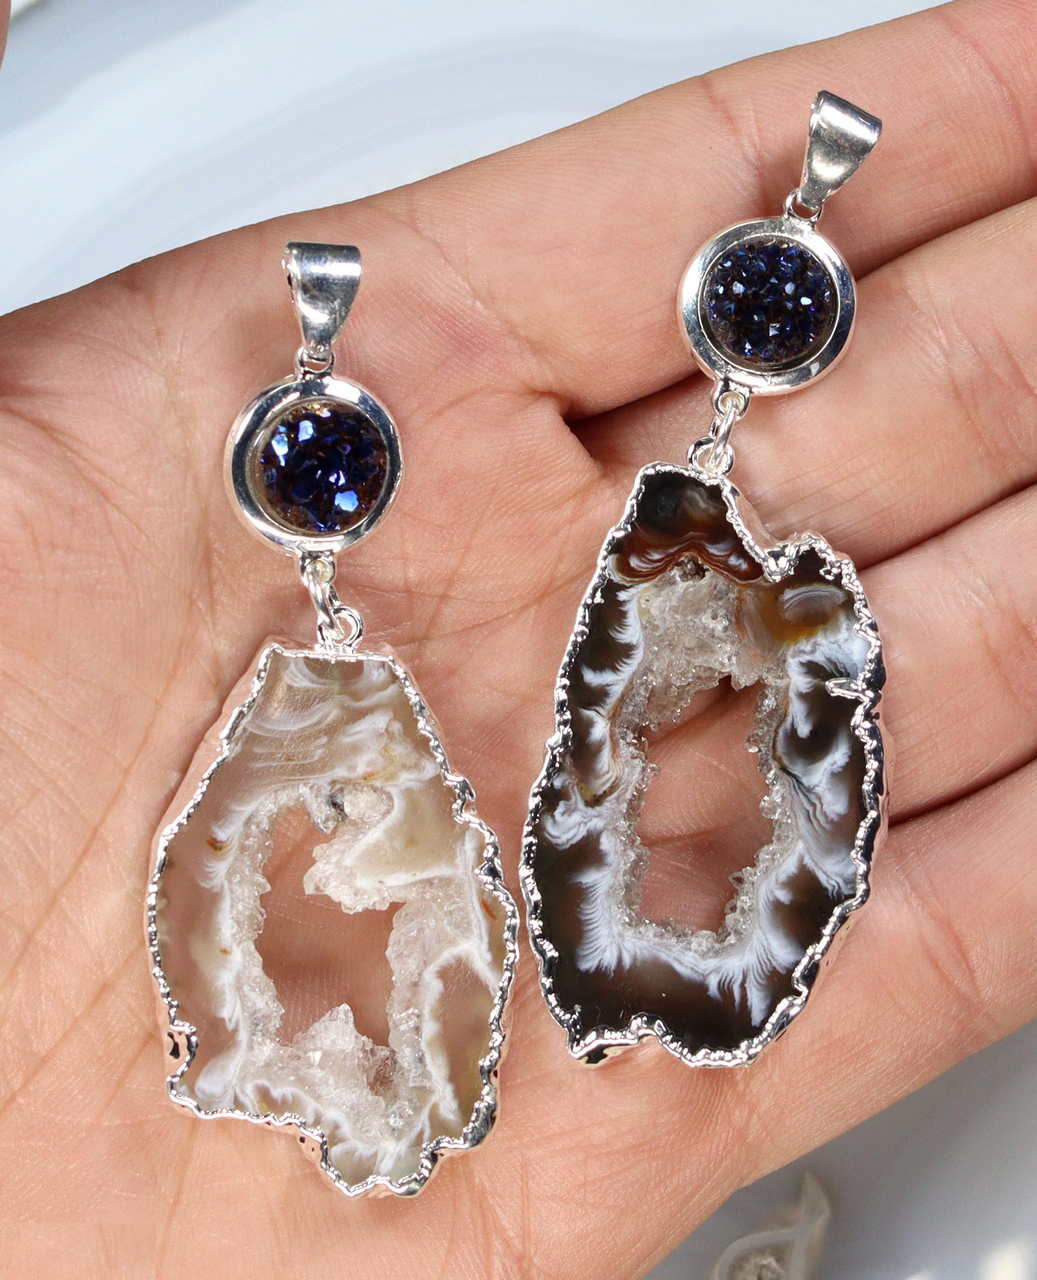 Oco-Geode slice pendant with Druzy crystal cabochon (1pc)